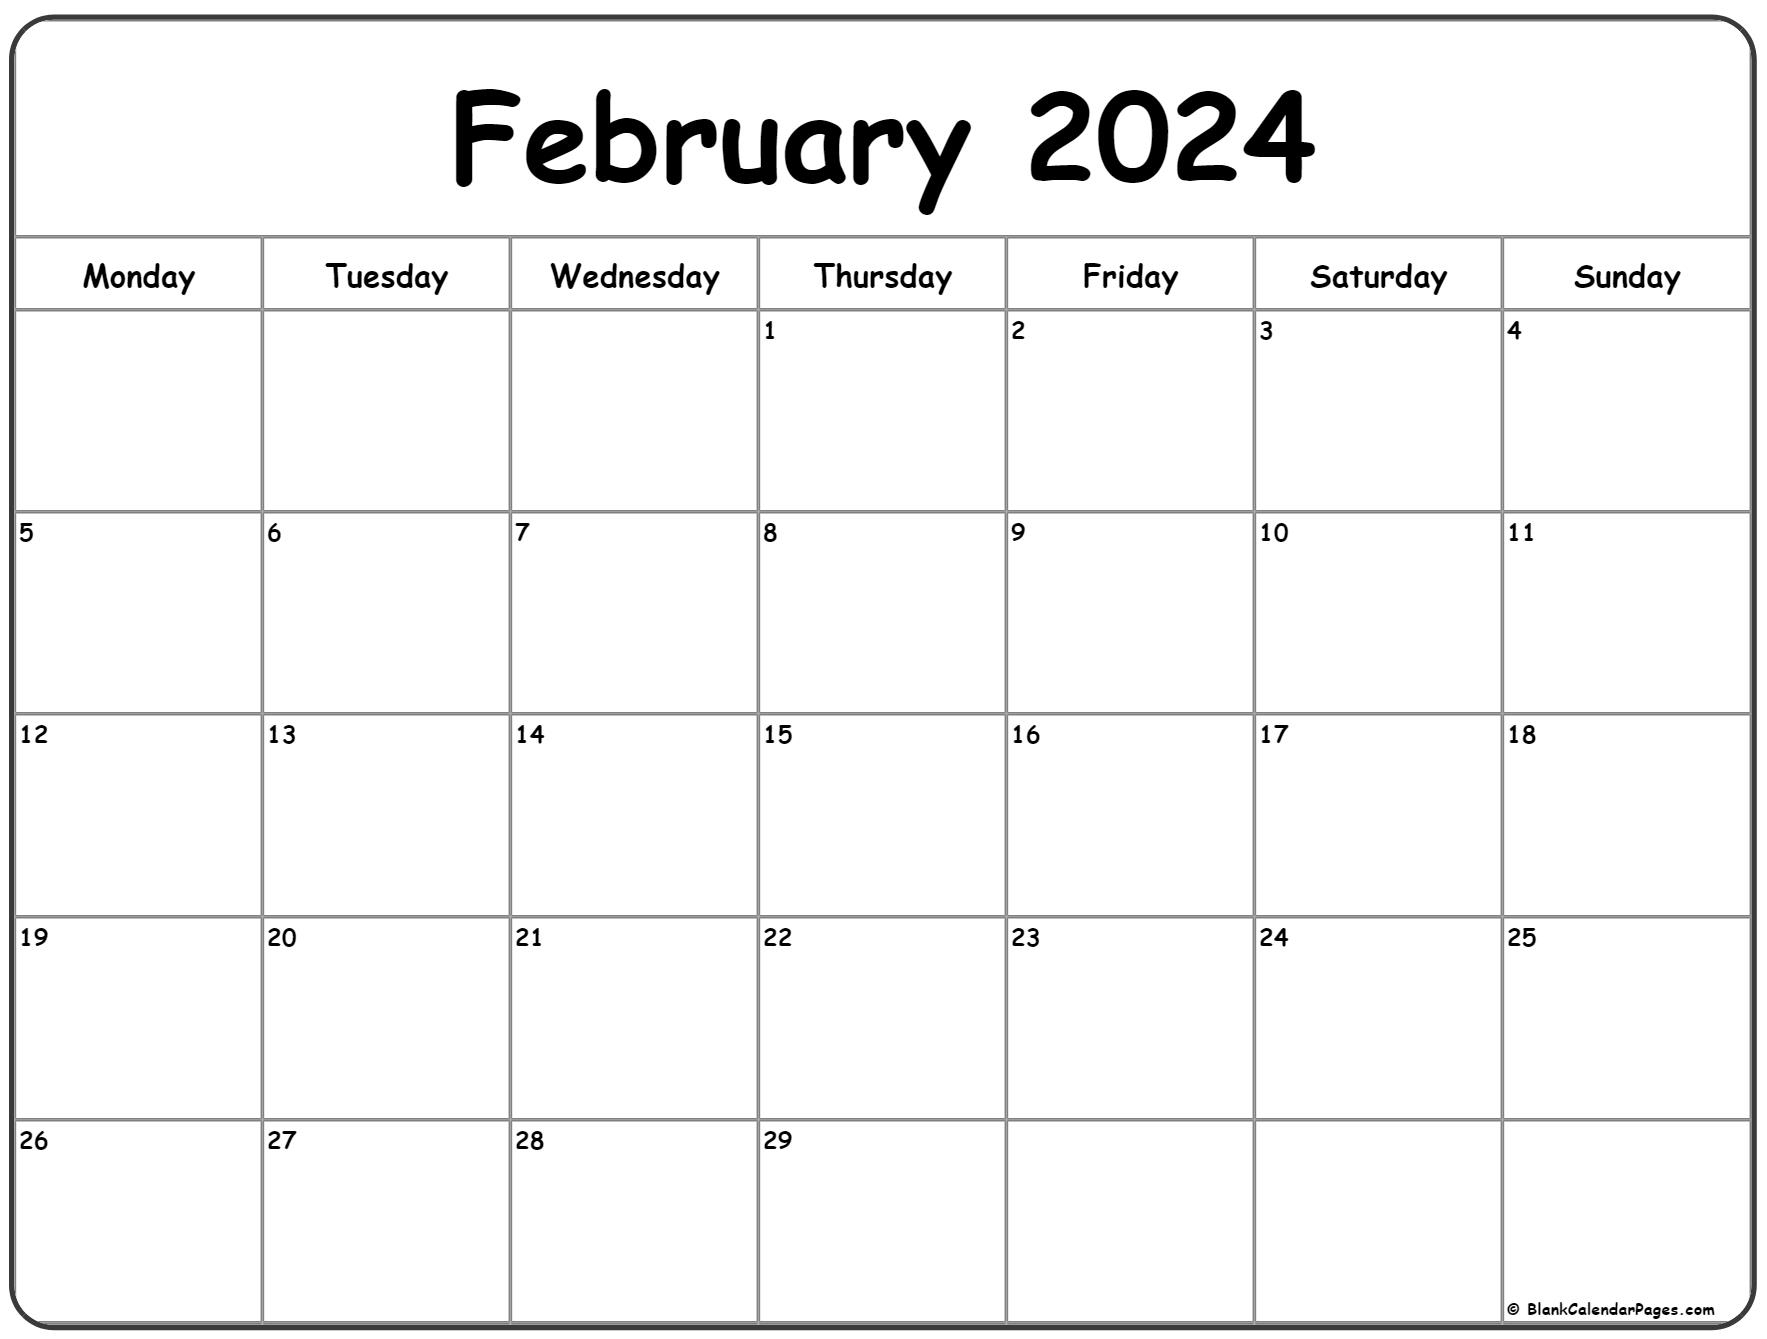 February 2024 Monday Calendar | Monday To Sunday for Printable Blank February 2024 Calendar